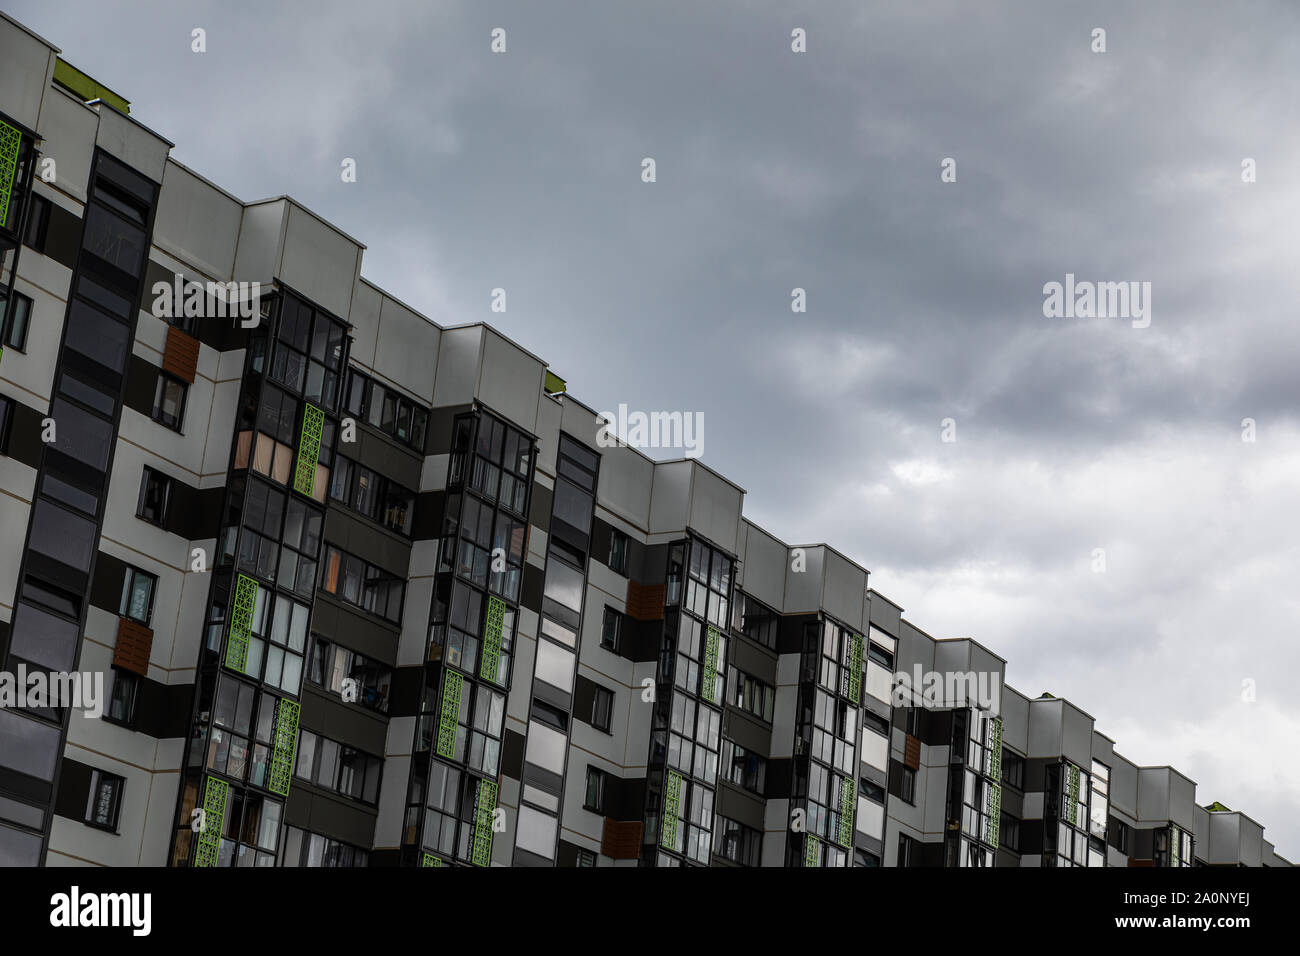 Modernly designed multiple family dwelling against gloomy sky Stock Photo